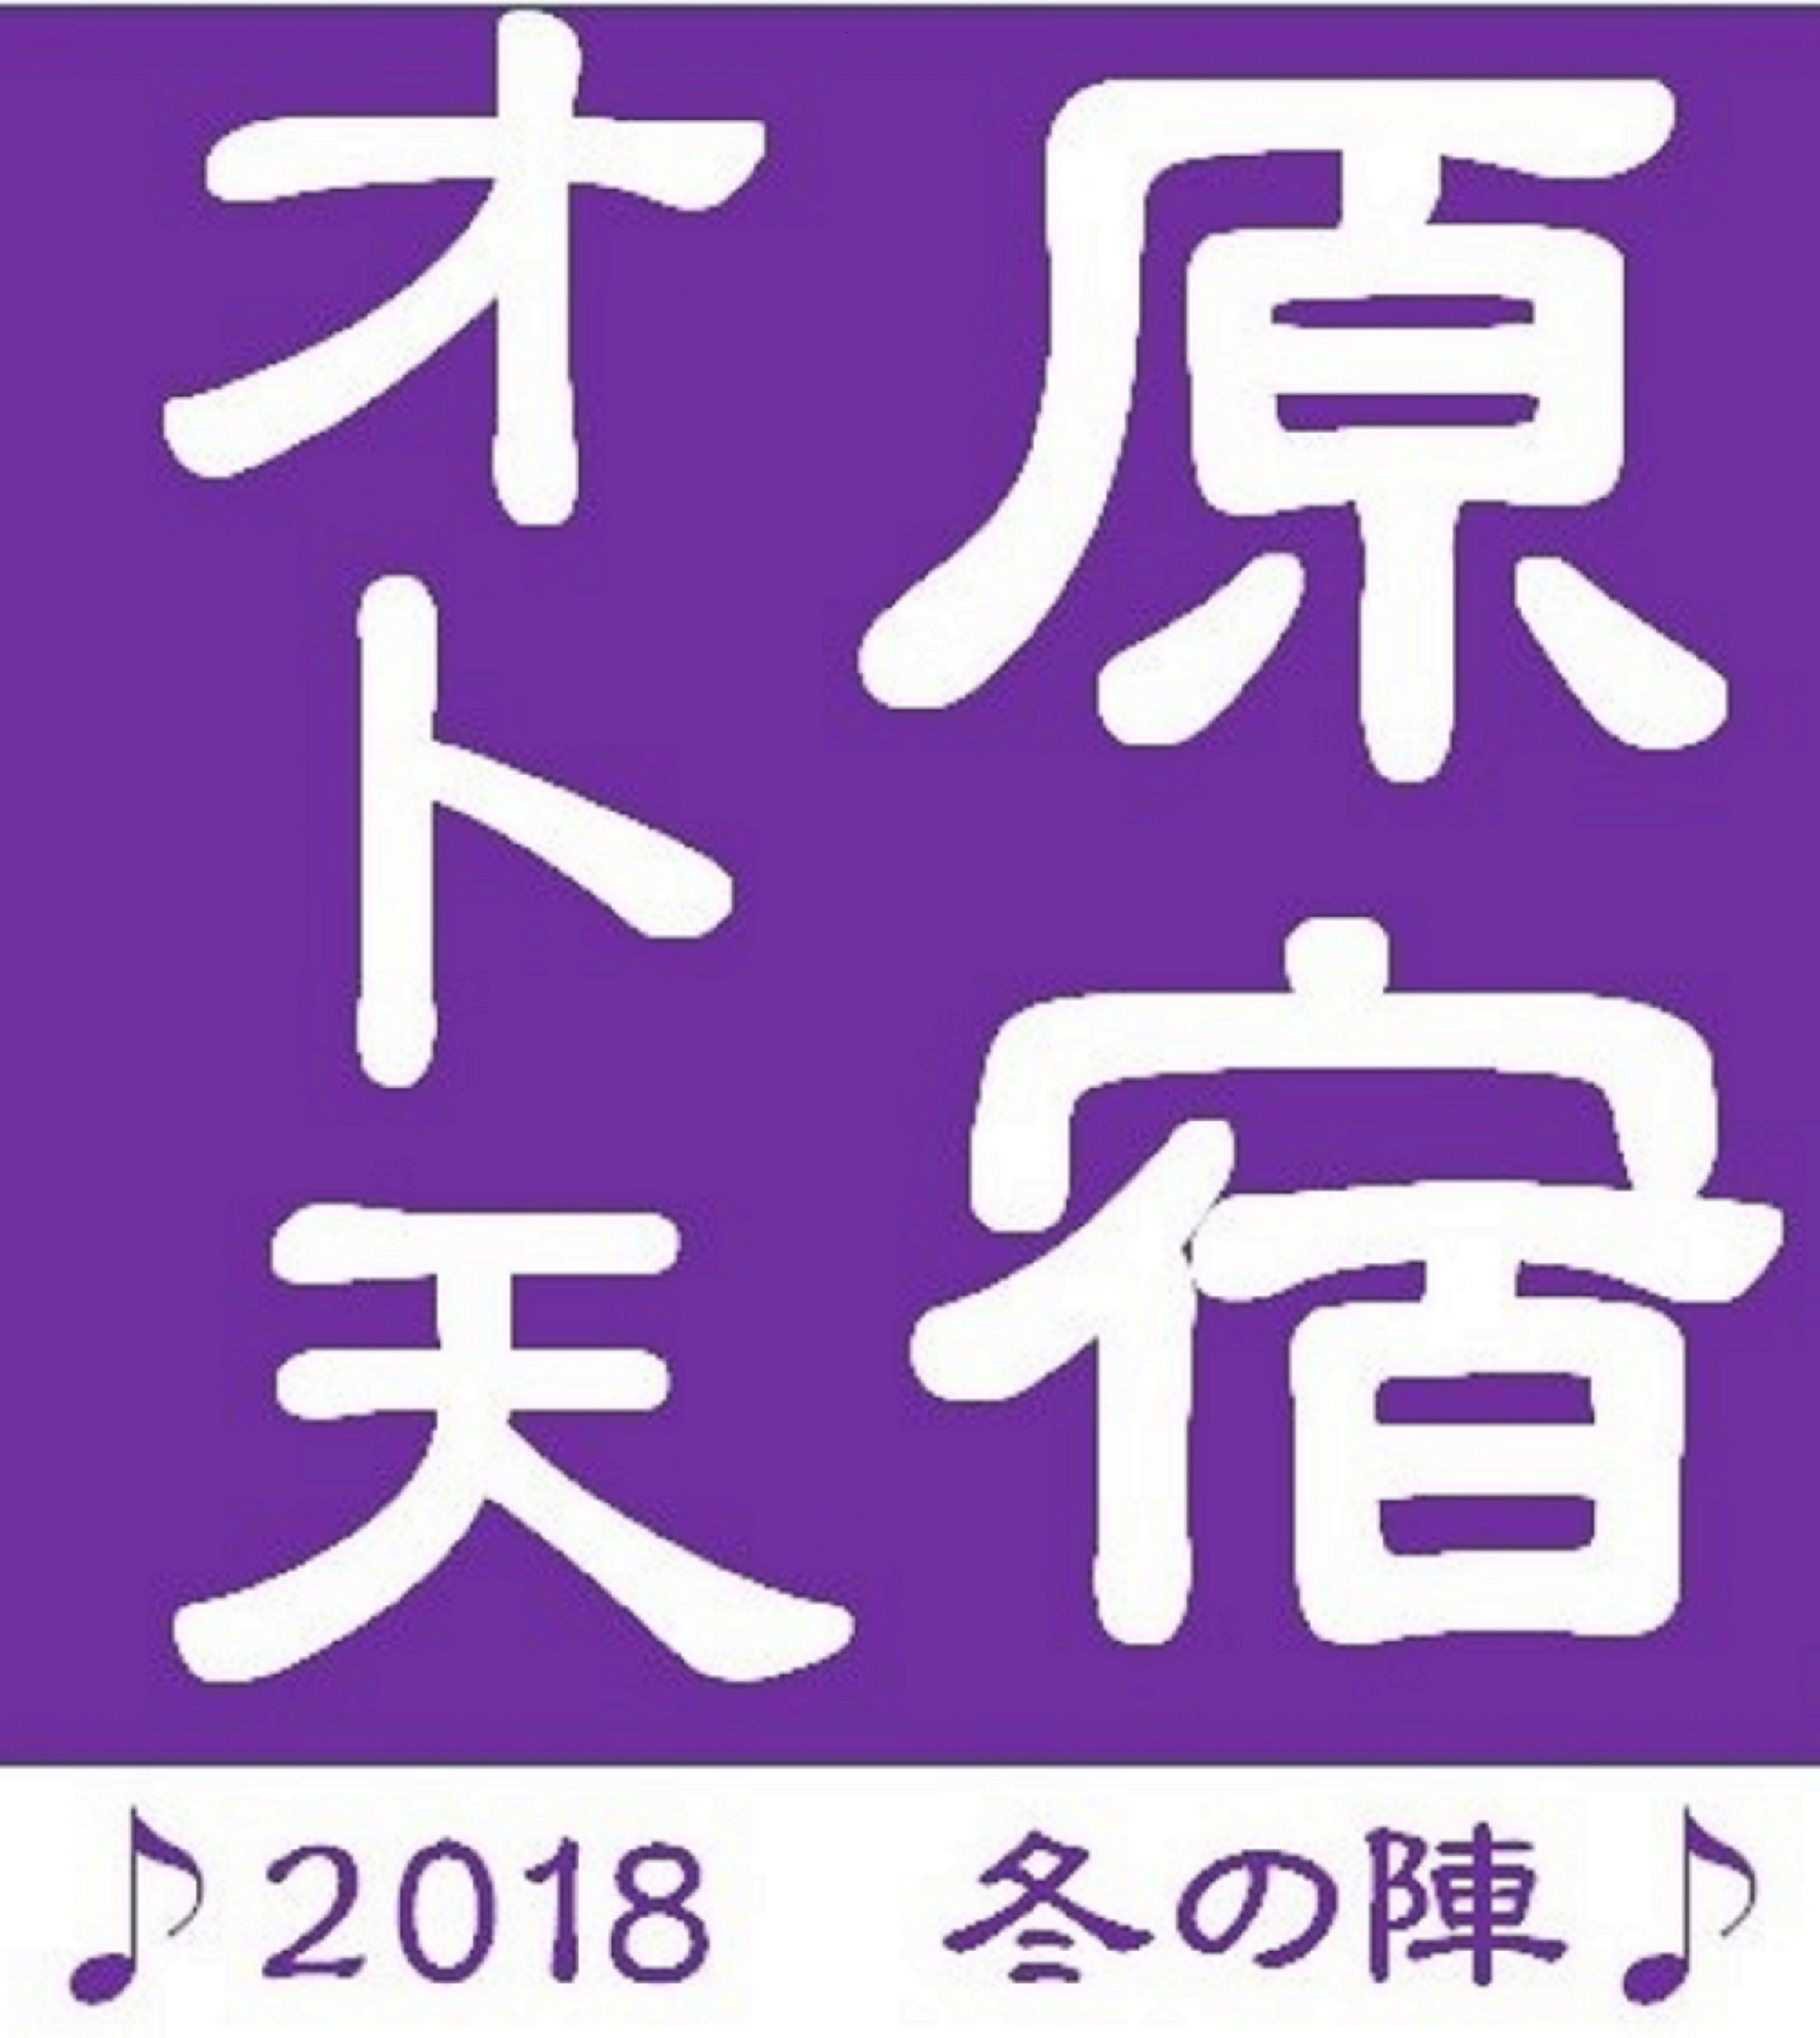 ‛LaDonna presents’ 原宿オト天・大人の文化祭 2018冬の陣